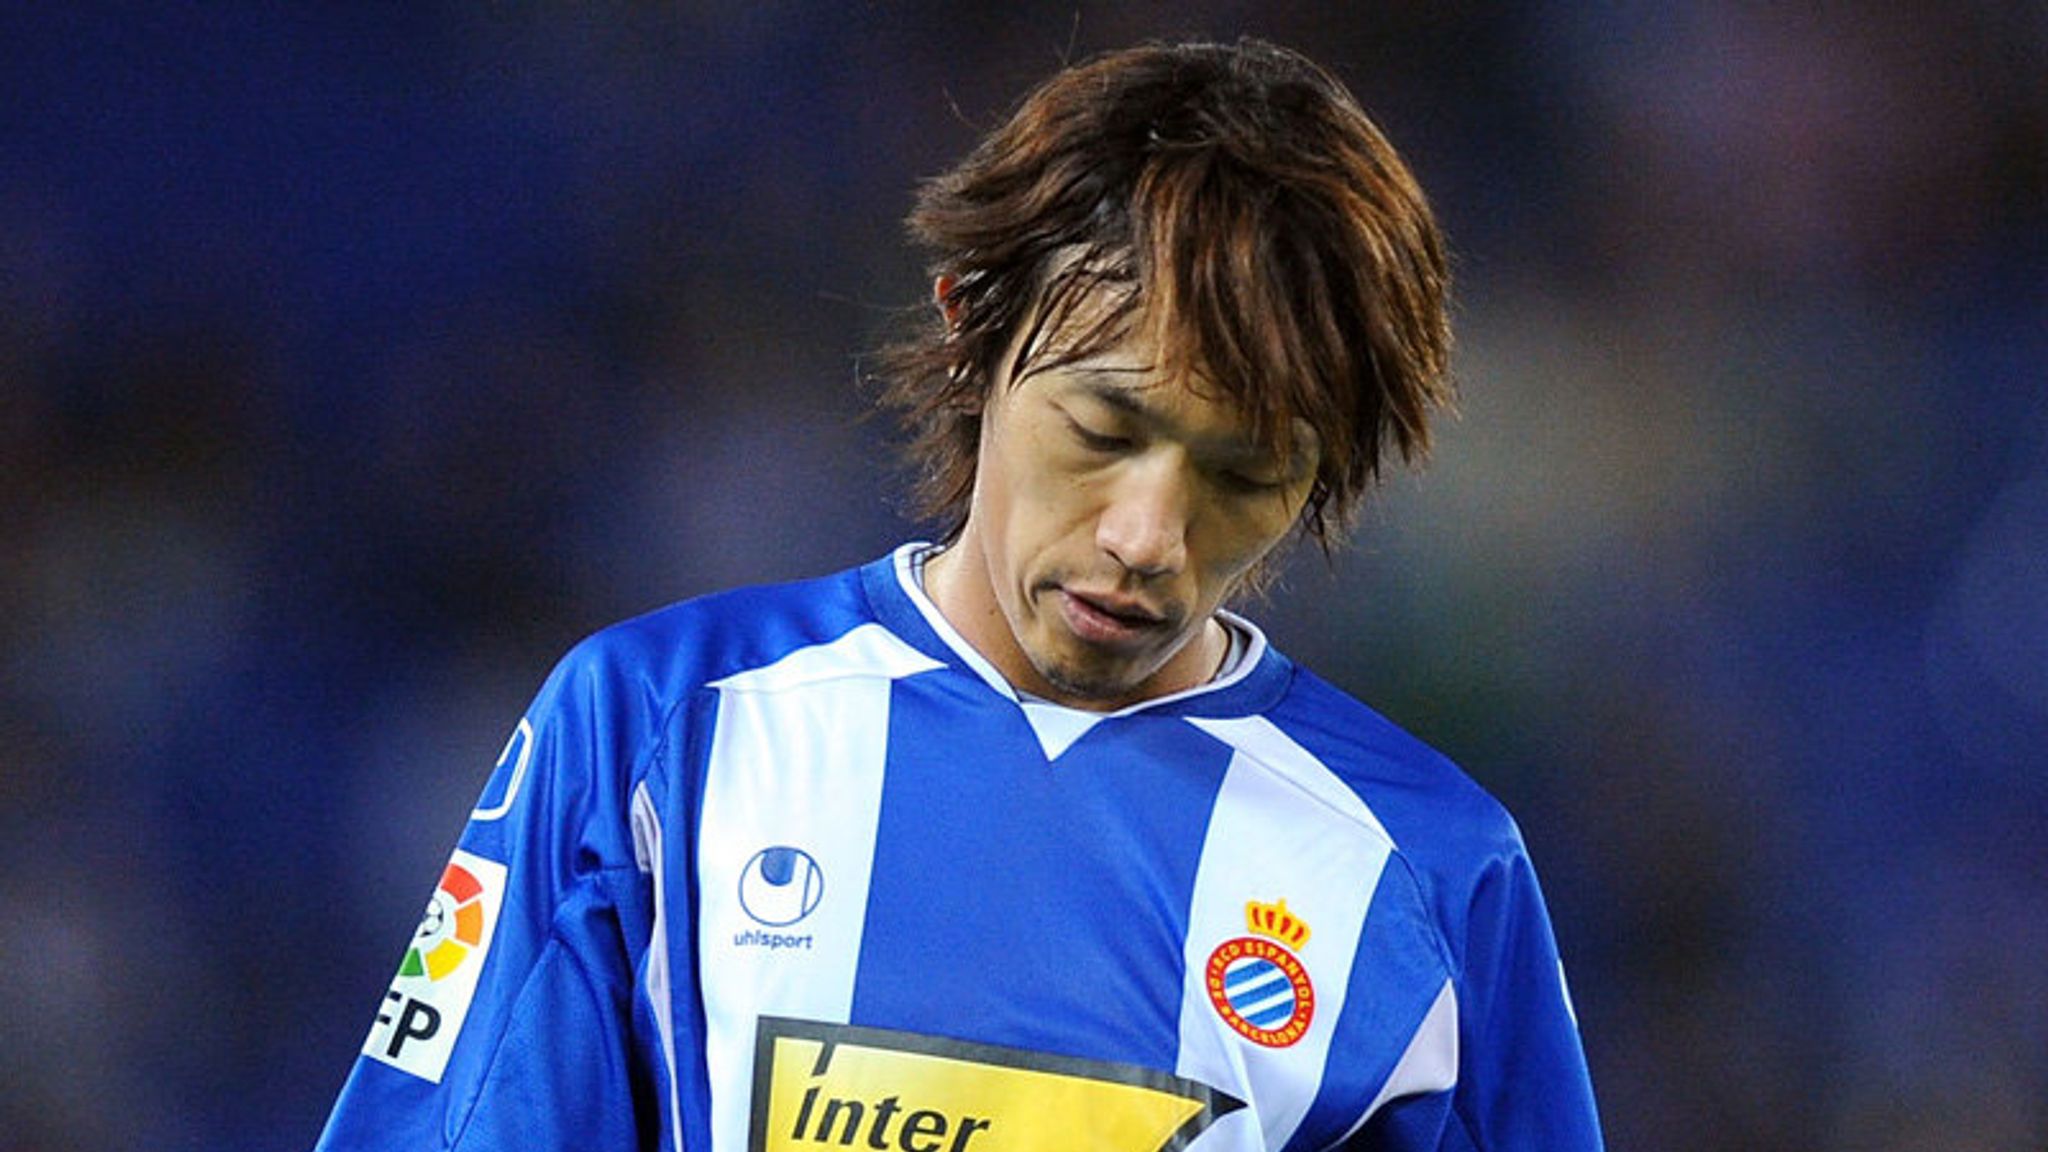 Shunsuke Nakamura - Player profile